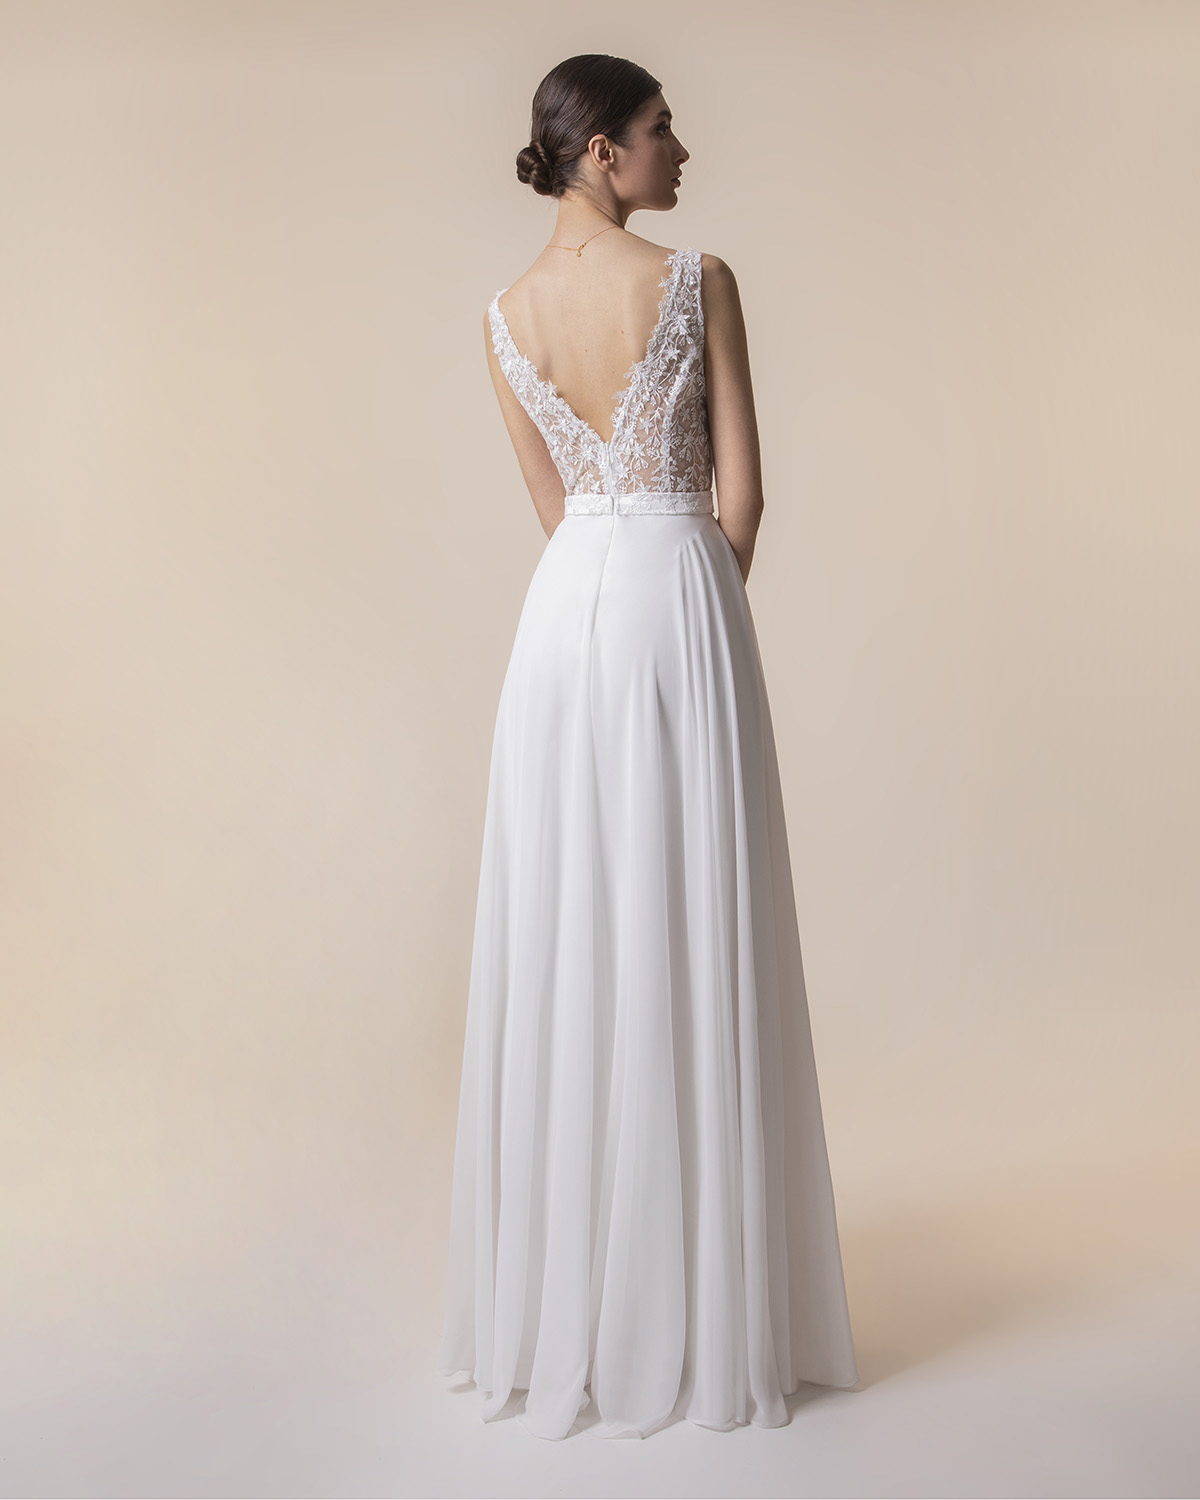 Вечерние платья / Long evening wedding dress with chiffon fabric and lace top